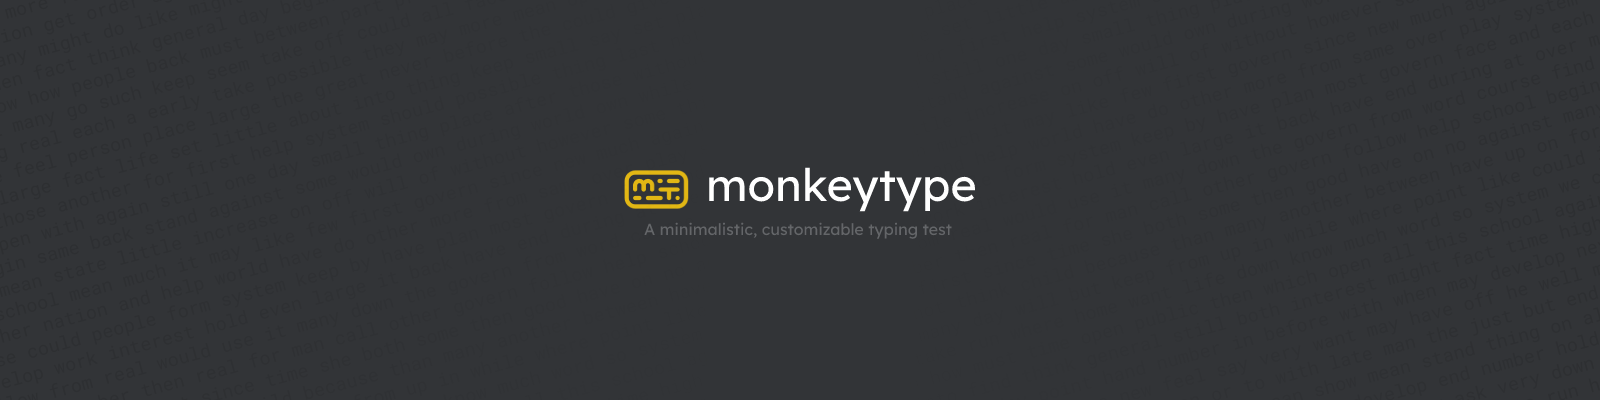 Monkeytype  A minimalistic, customizable typing test